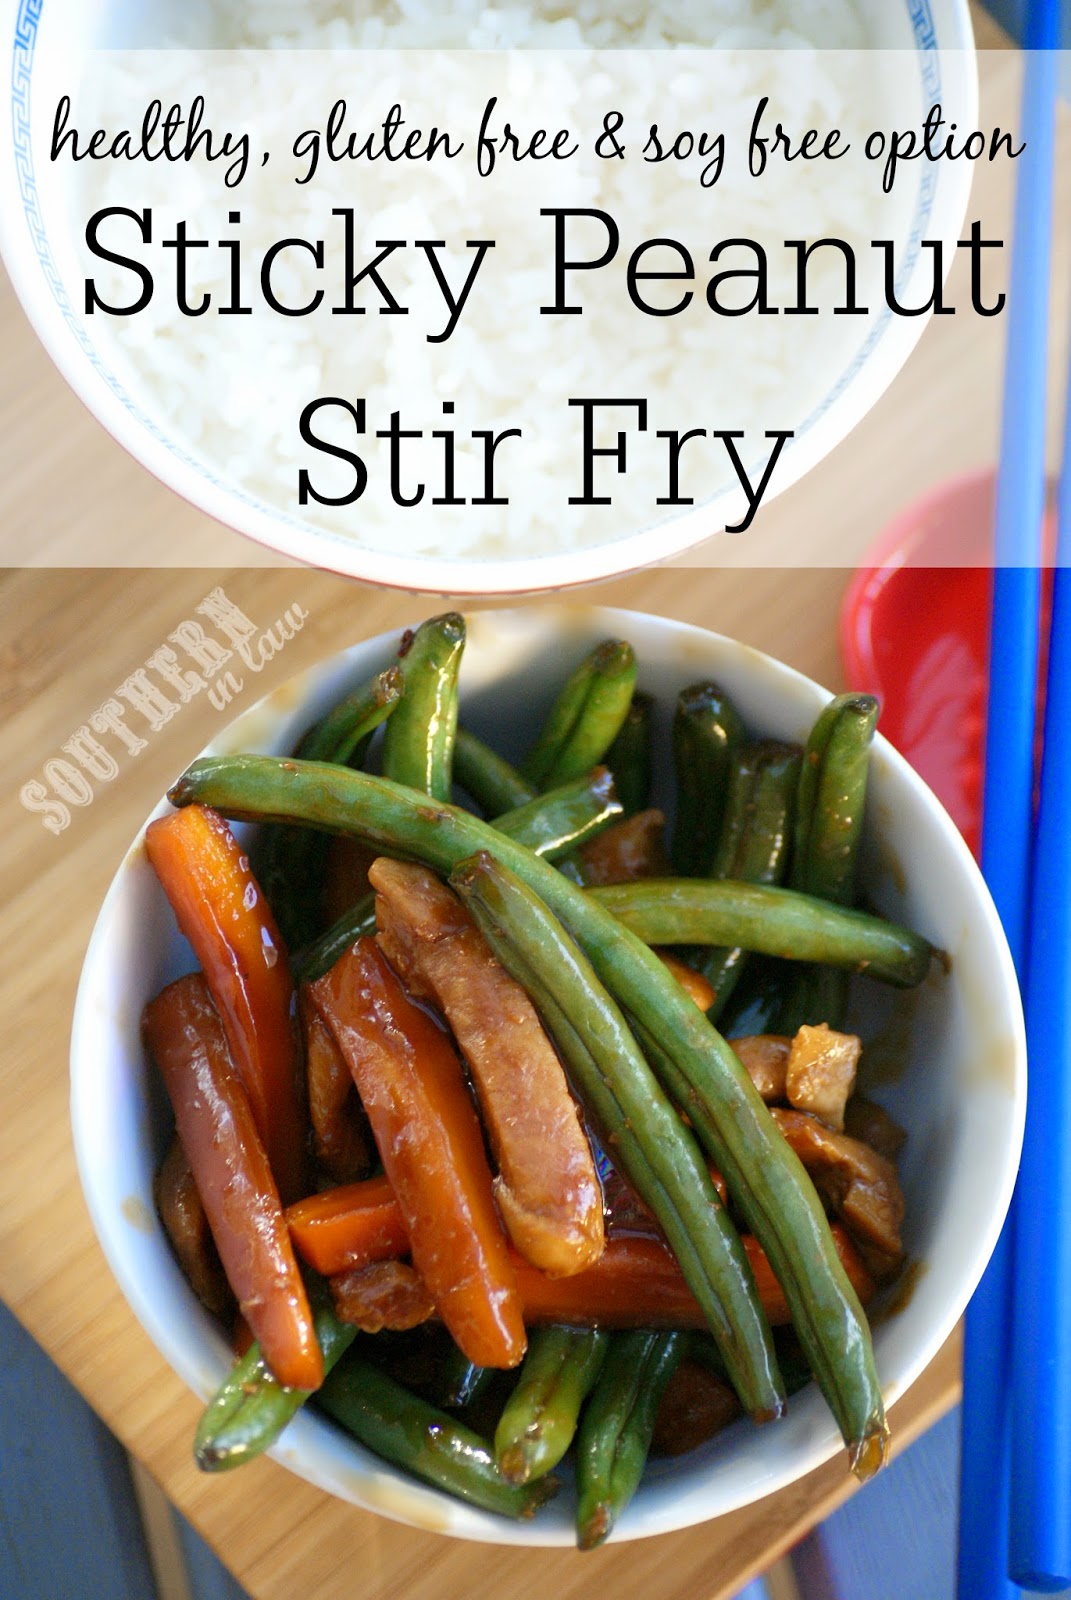 Healthy Sticky Peanut Satay Stir Fry Recipe - low fat, gluten free, vegan, soy free, healthy, clean eating friendly